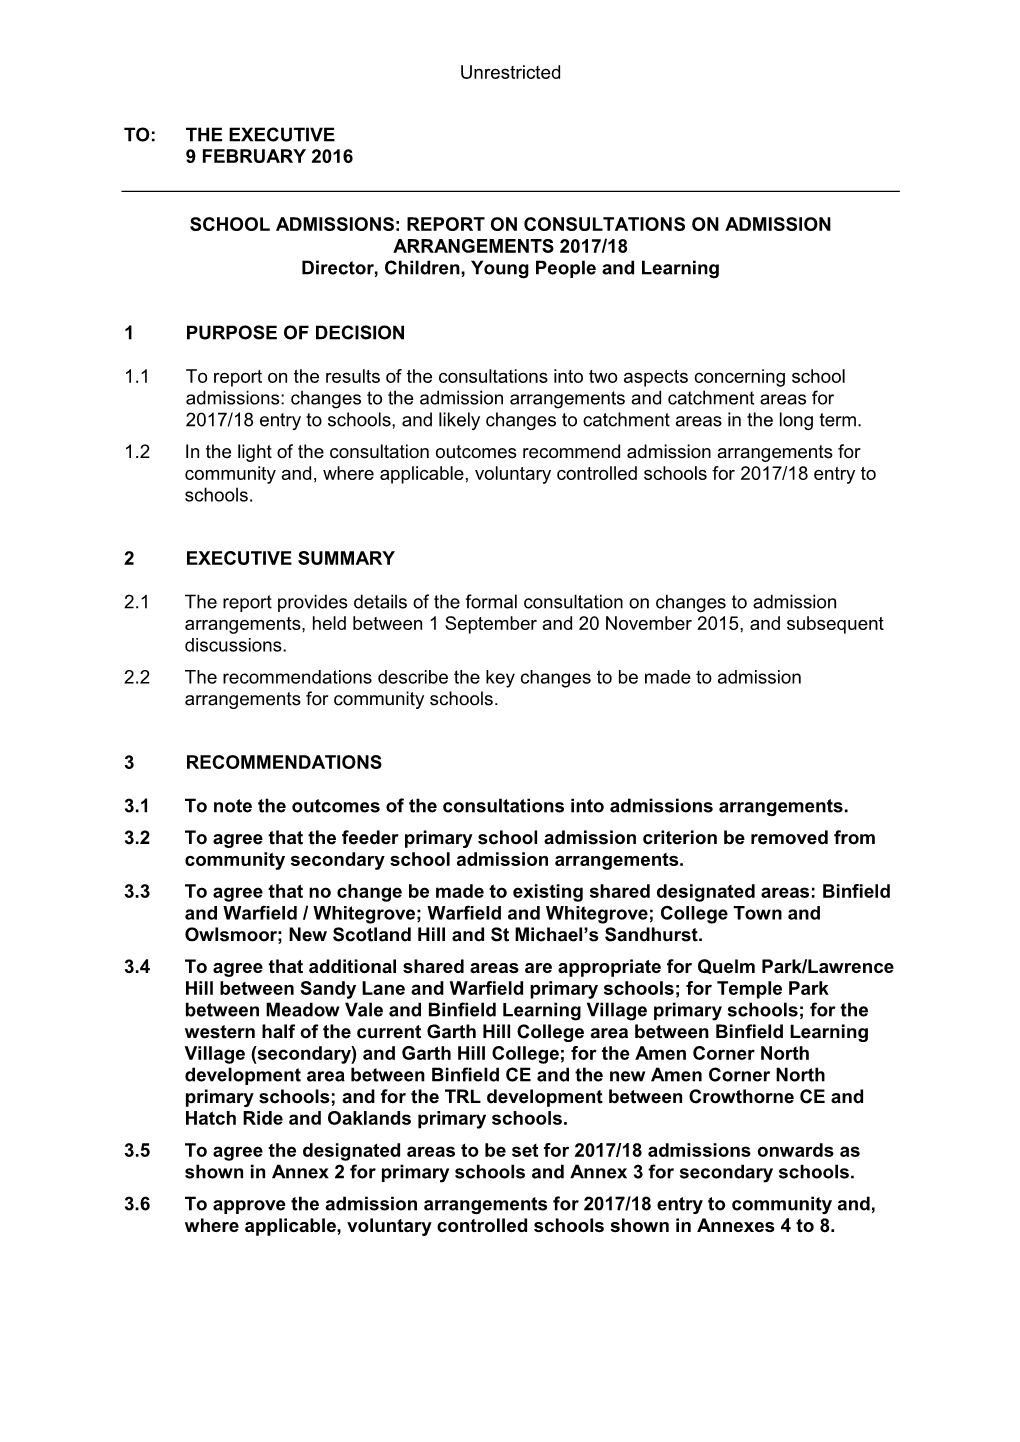 05 School Admissions Arrangements PDF 2 MB